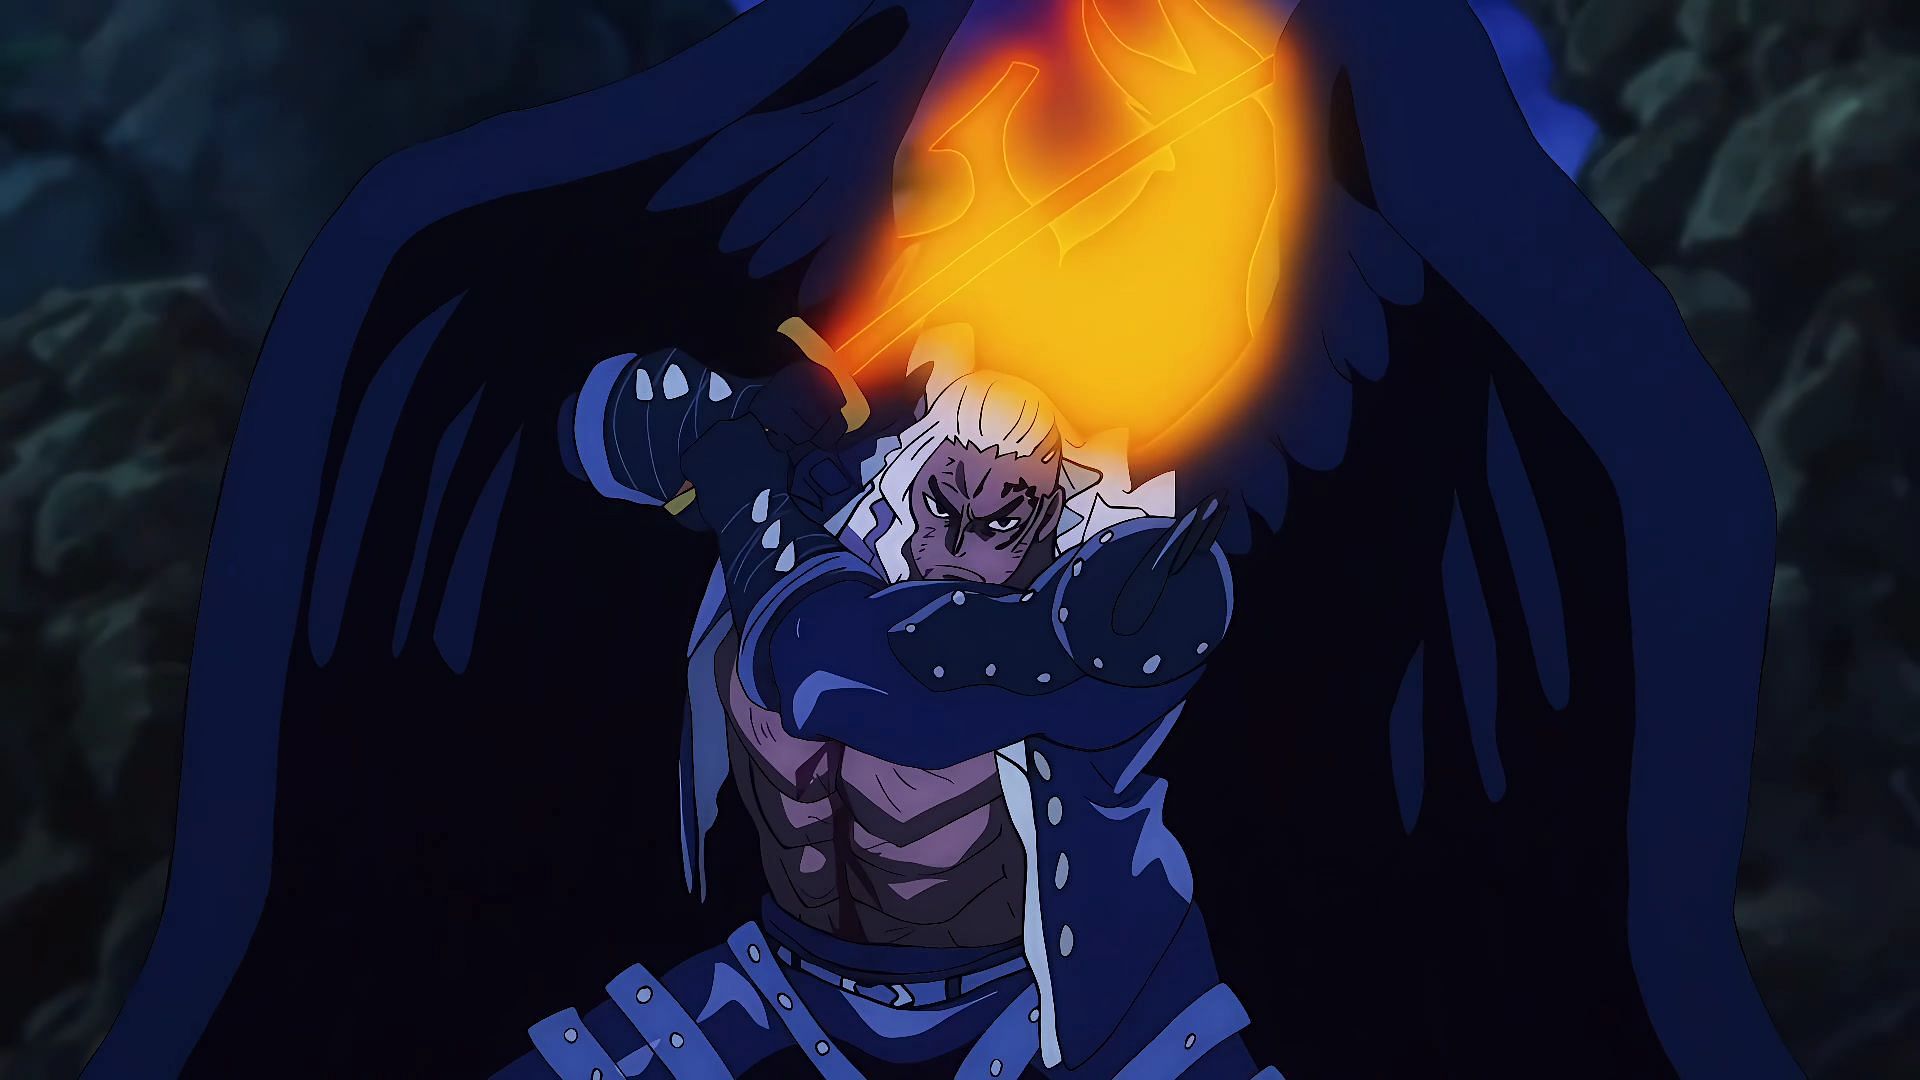 King (Image via Toei Animation, One Piece)